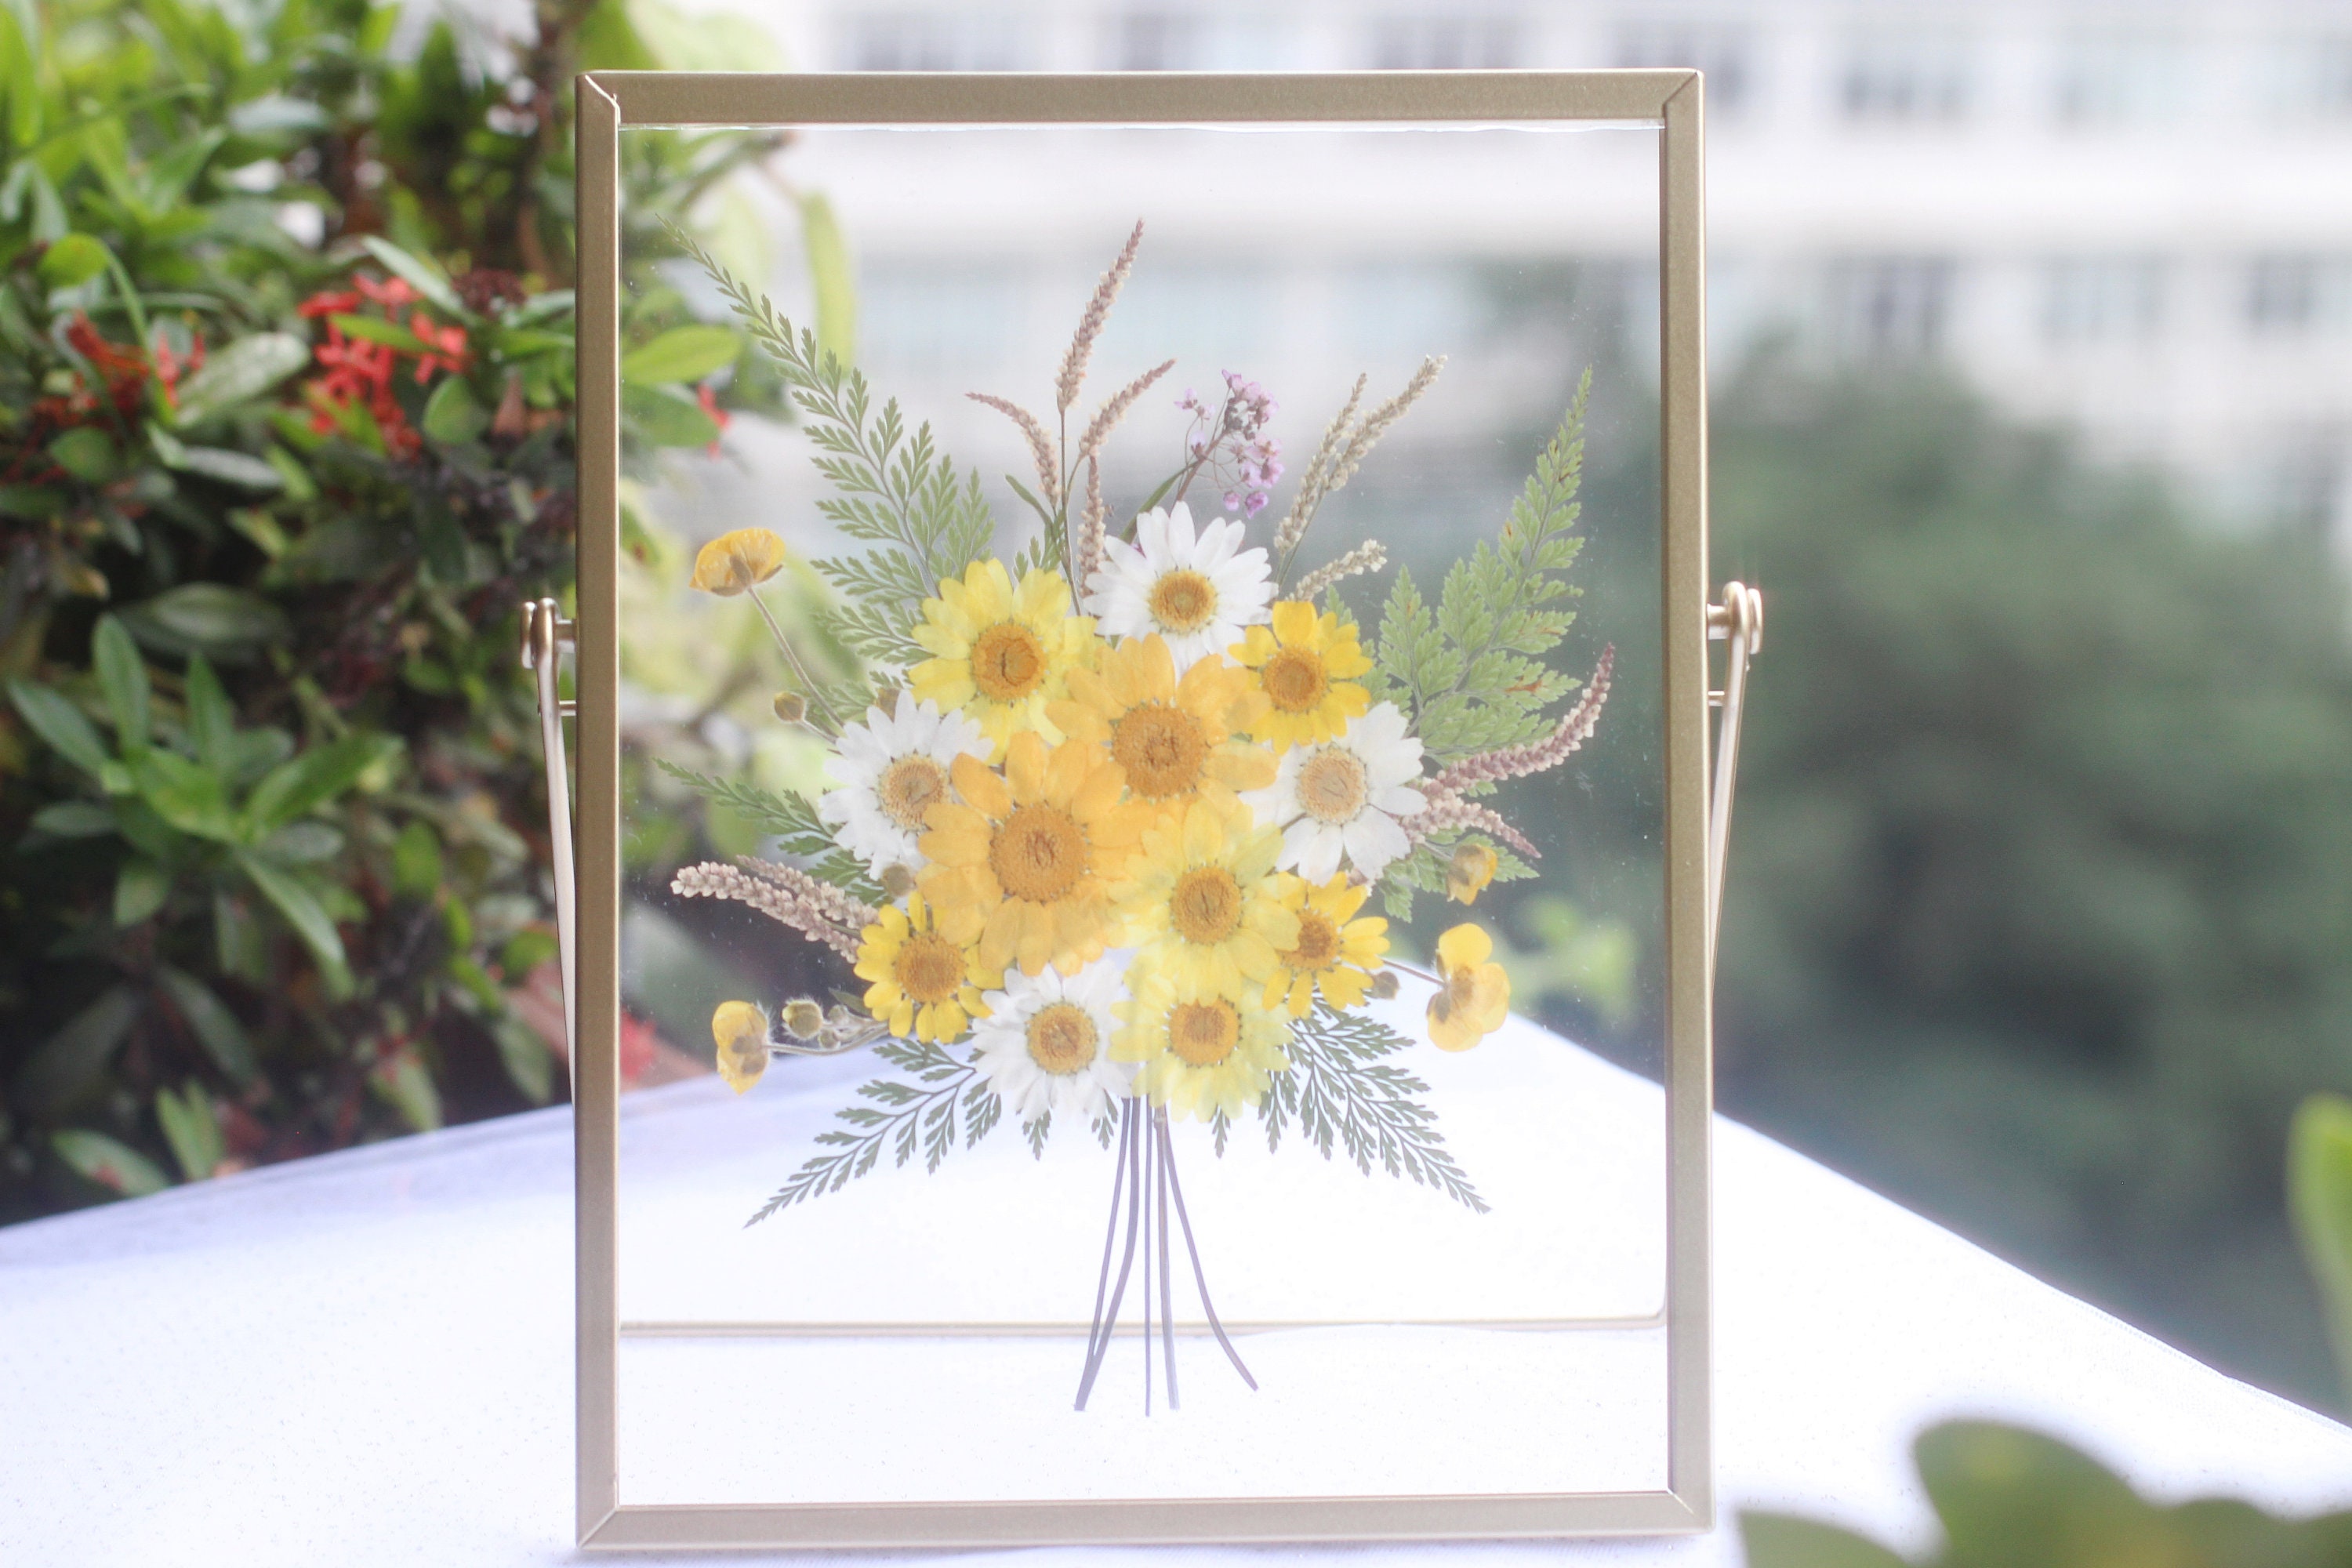 Dried Pressed Flowers Art, Pressed Sunflowers for Crafts, Dry Flowers,  Herbarium Flowers, Card Making, Scrapbooking, Wedding Decoration, Art 